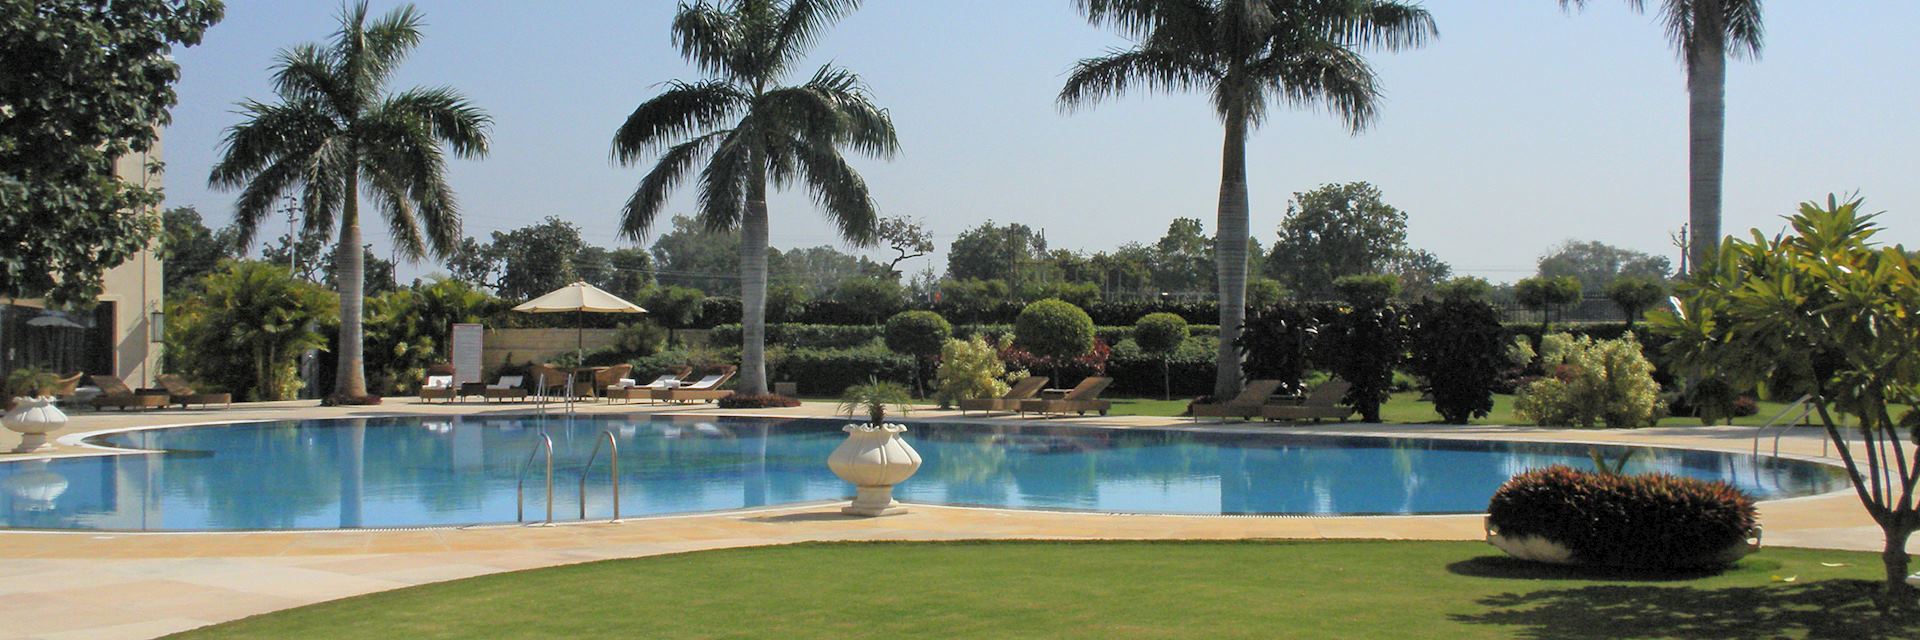 The Lalit Mumbai Pool Pictures & Reviews - Tripadvisor